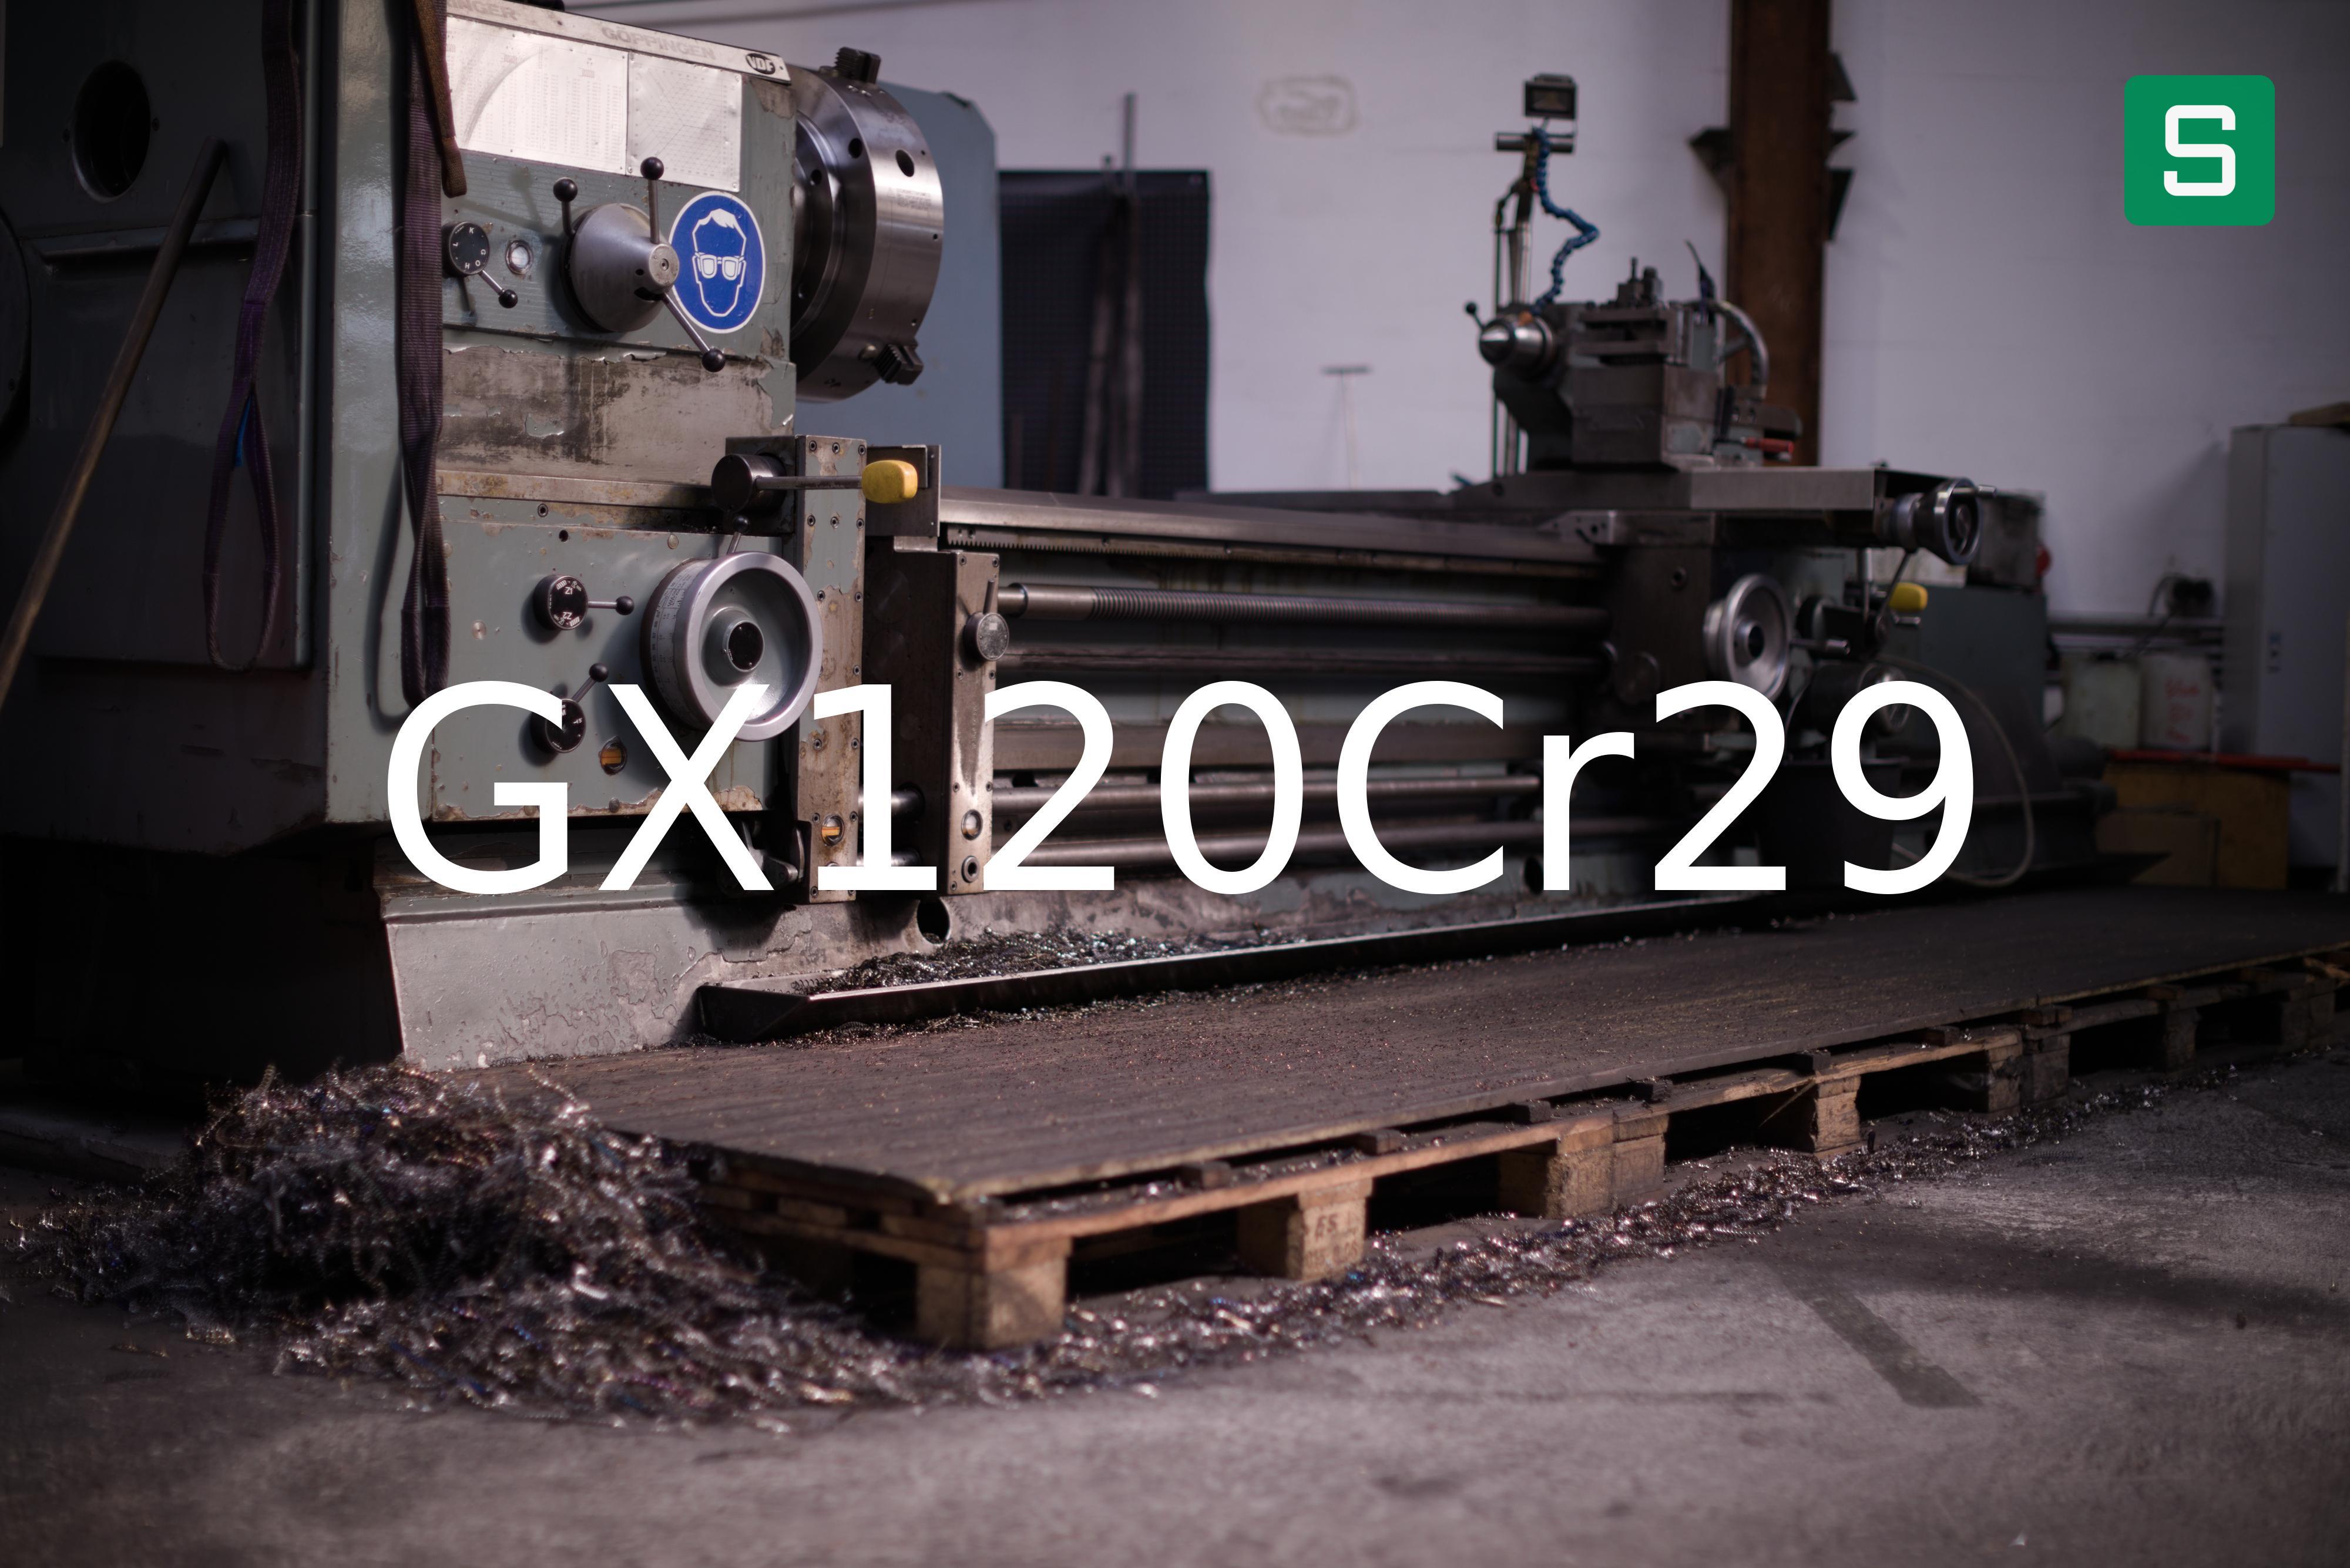 Steel Material: GX120Cr29